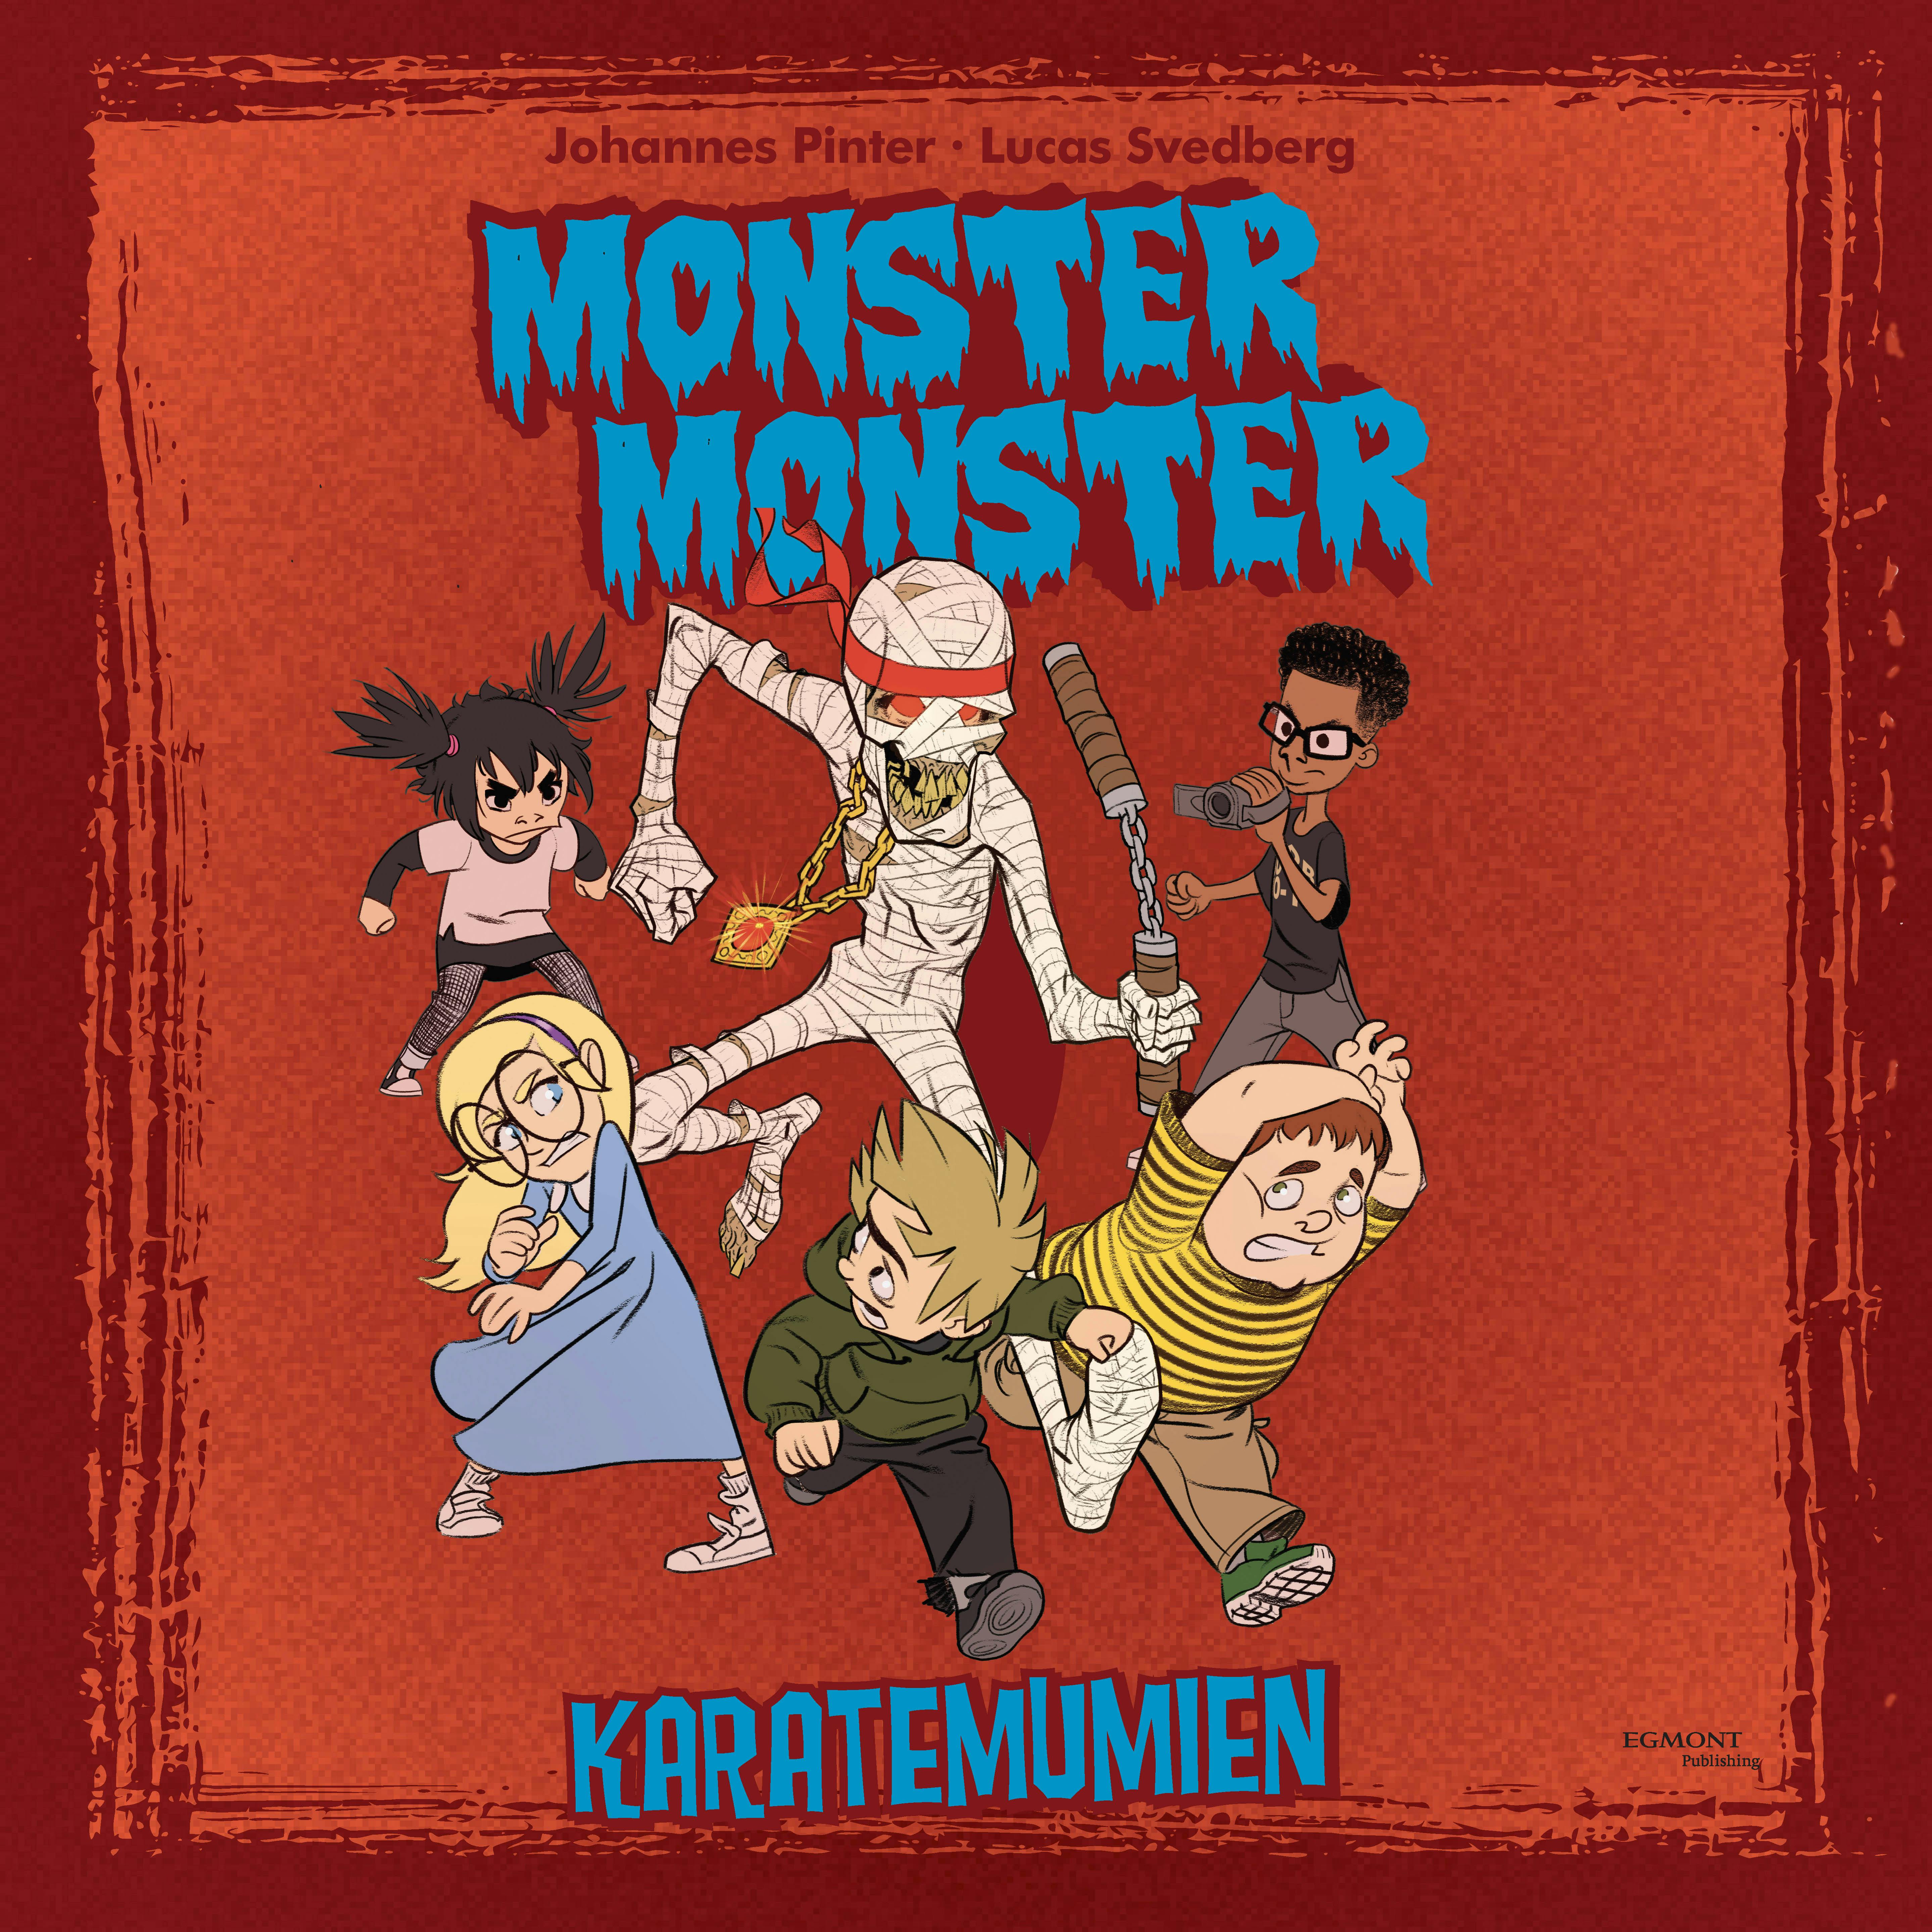 Monster Monster - Karatemumien - Johannes Pinter